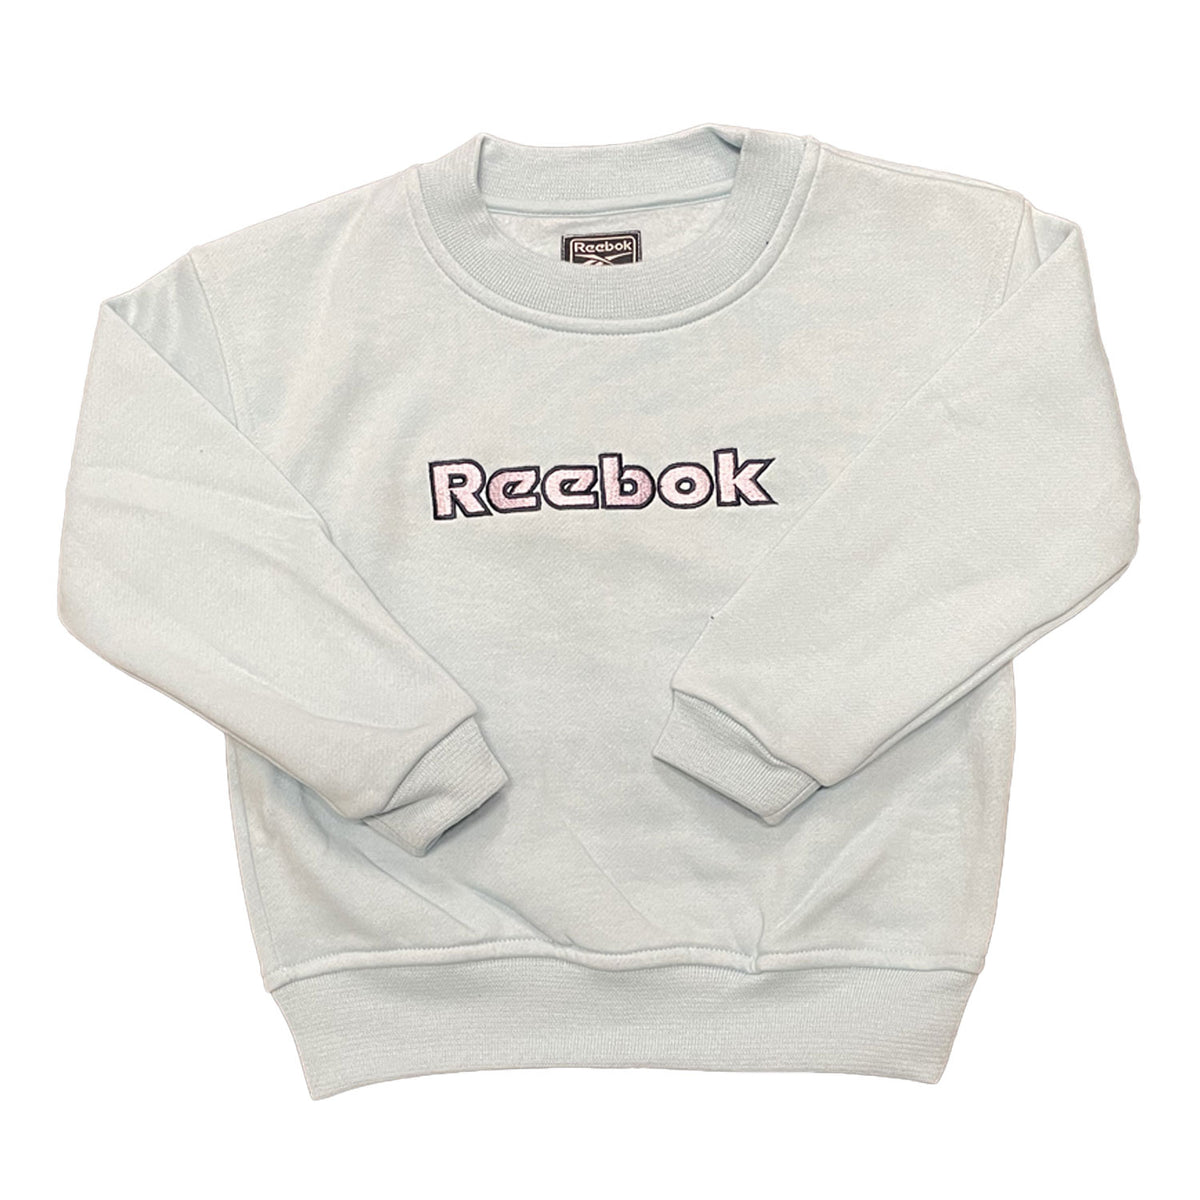 Reebok's Infant Sports Academy Sweatshirt 3